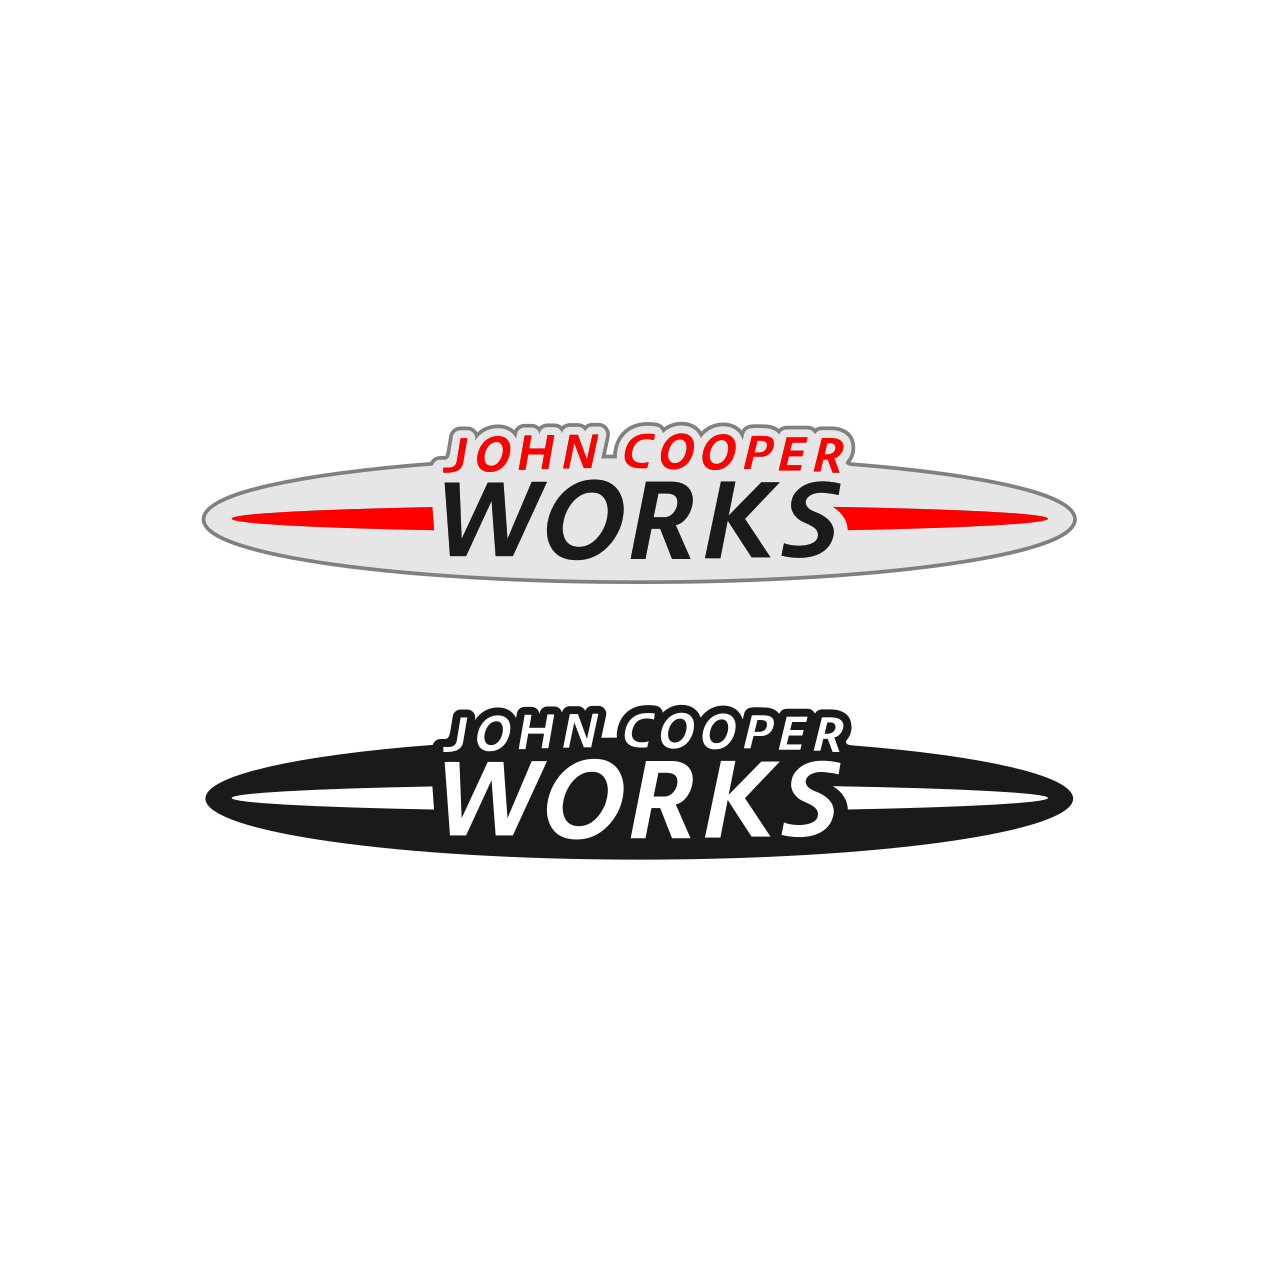 Download John Cooper Works 2019 Logo PNG and Vector (PDF, SVG, Ai